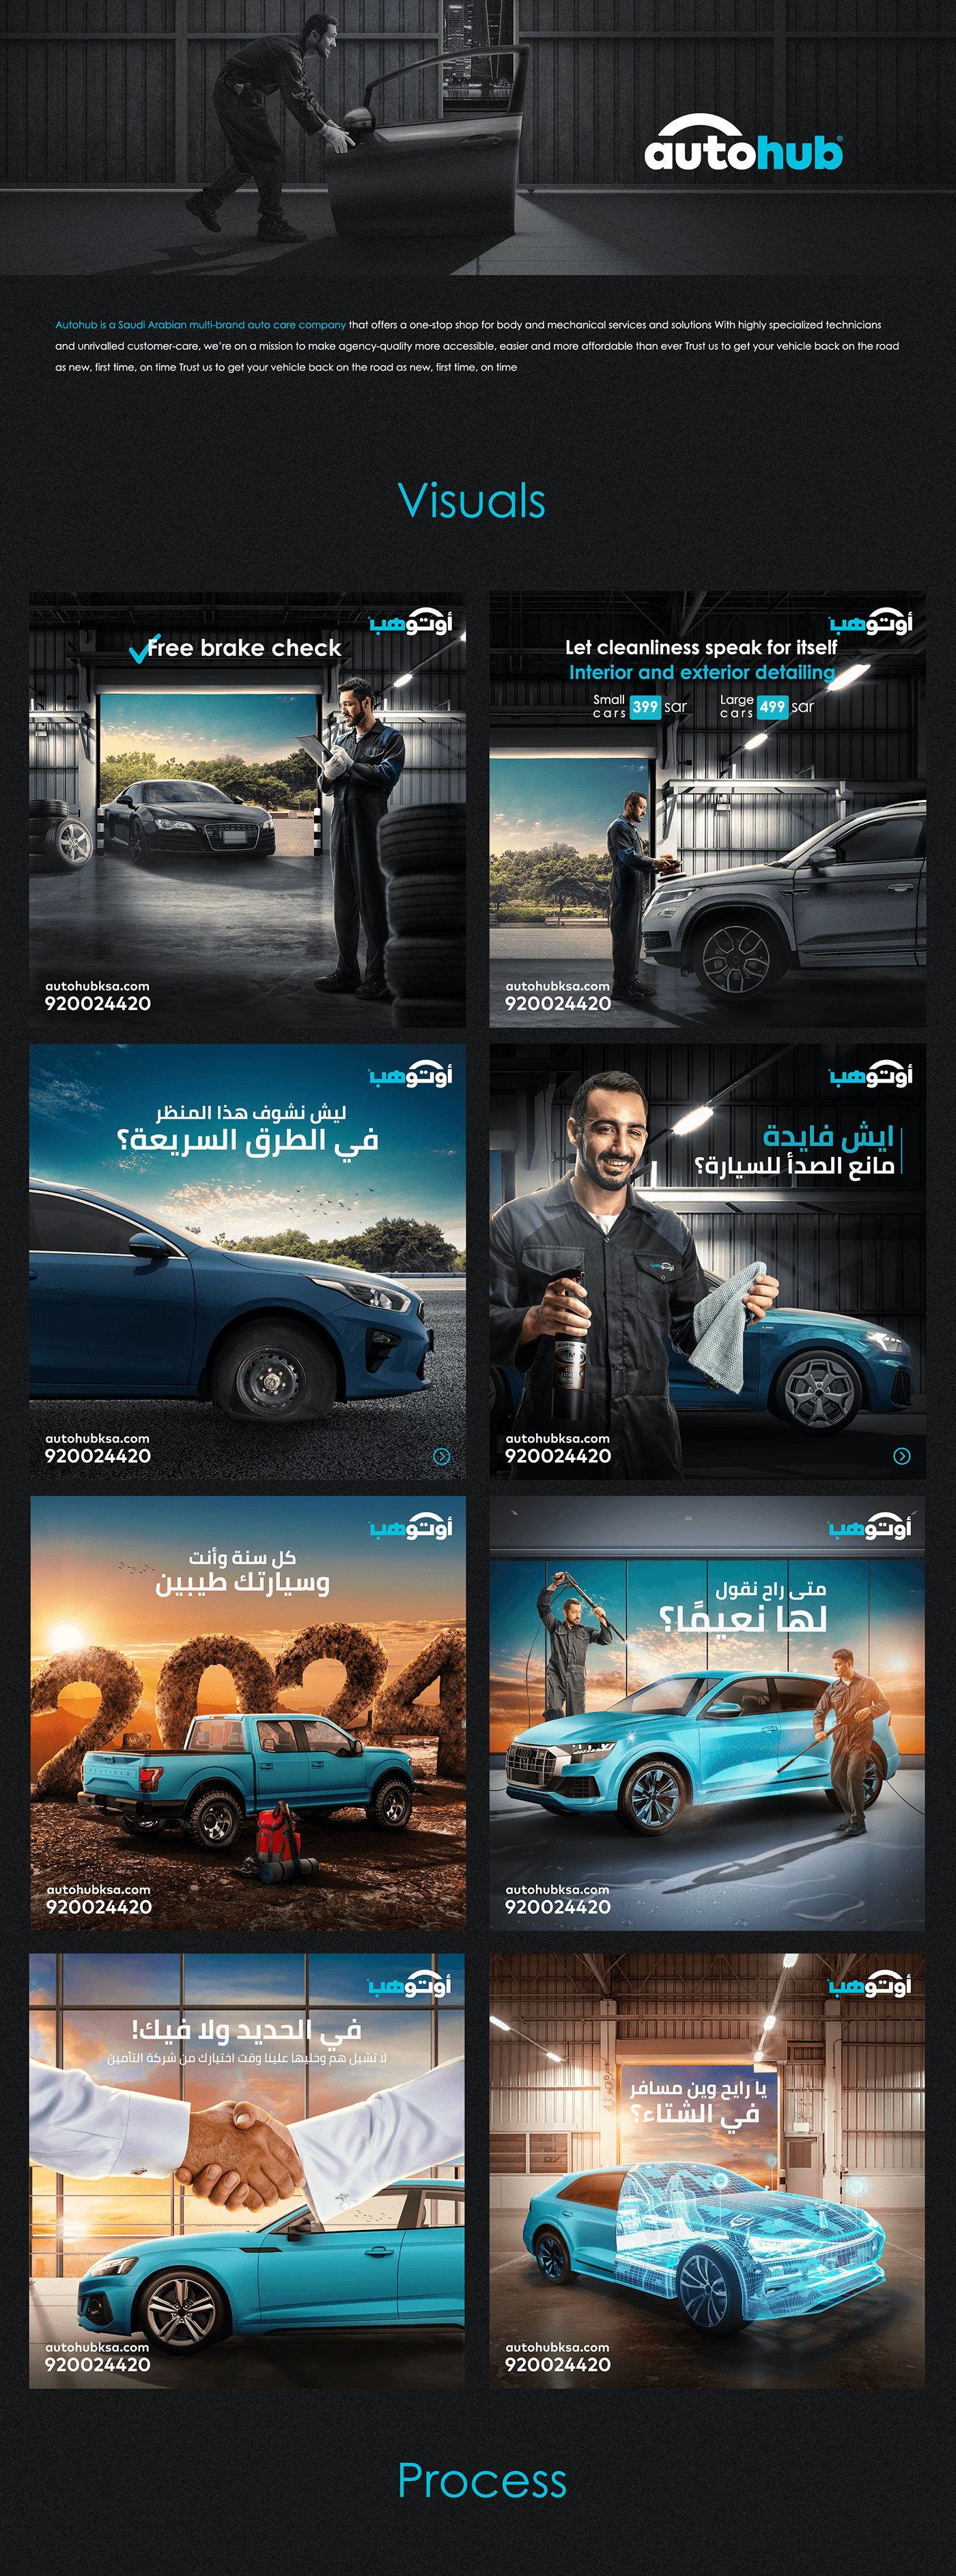 Advertising  marketing   ads Socialmedia visual identity post Saudi Arabia photoshop automotive   car